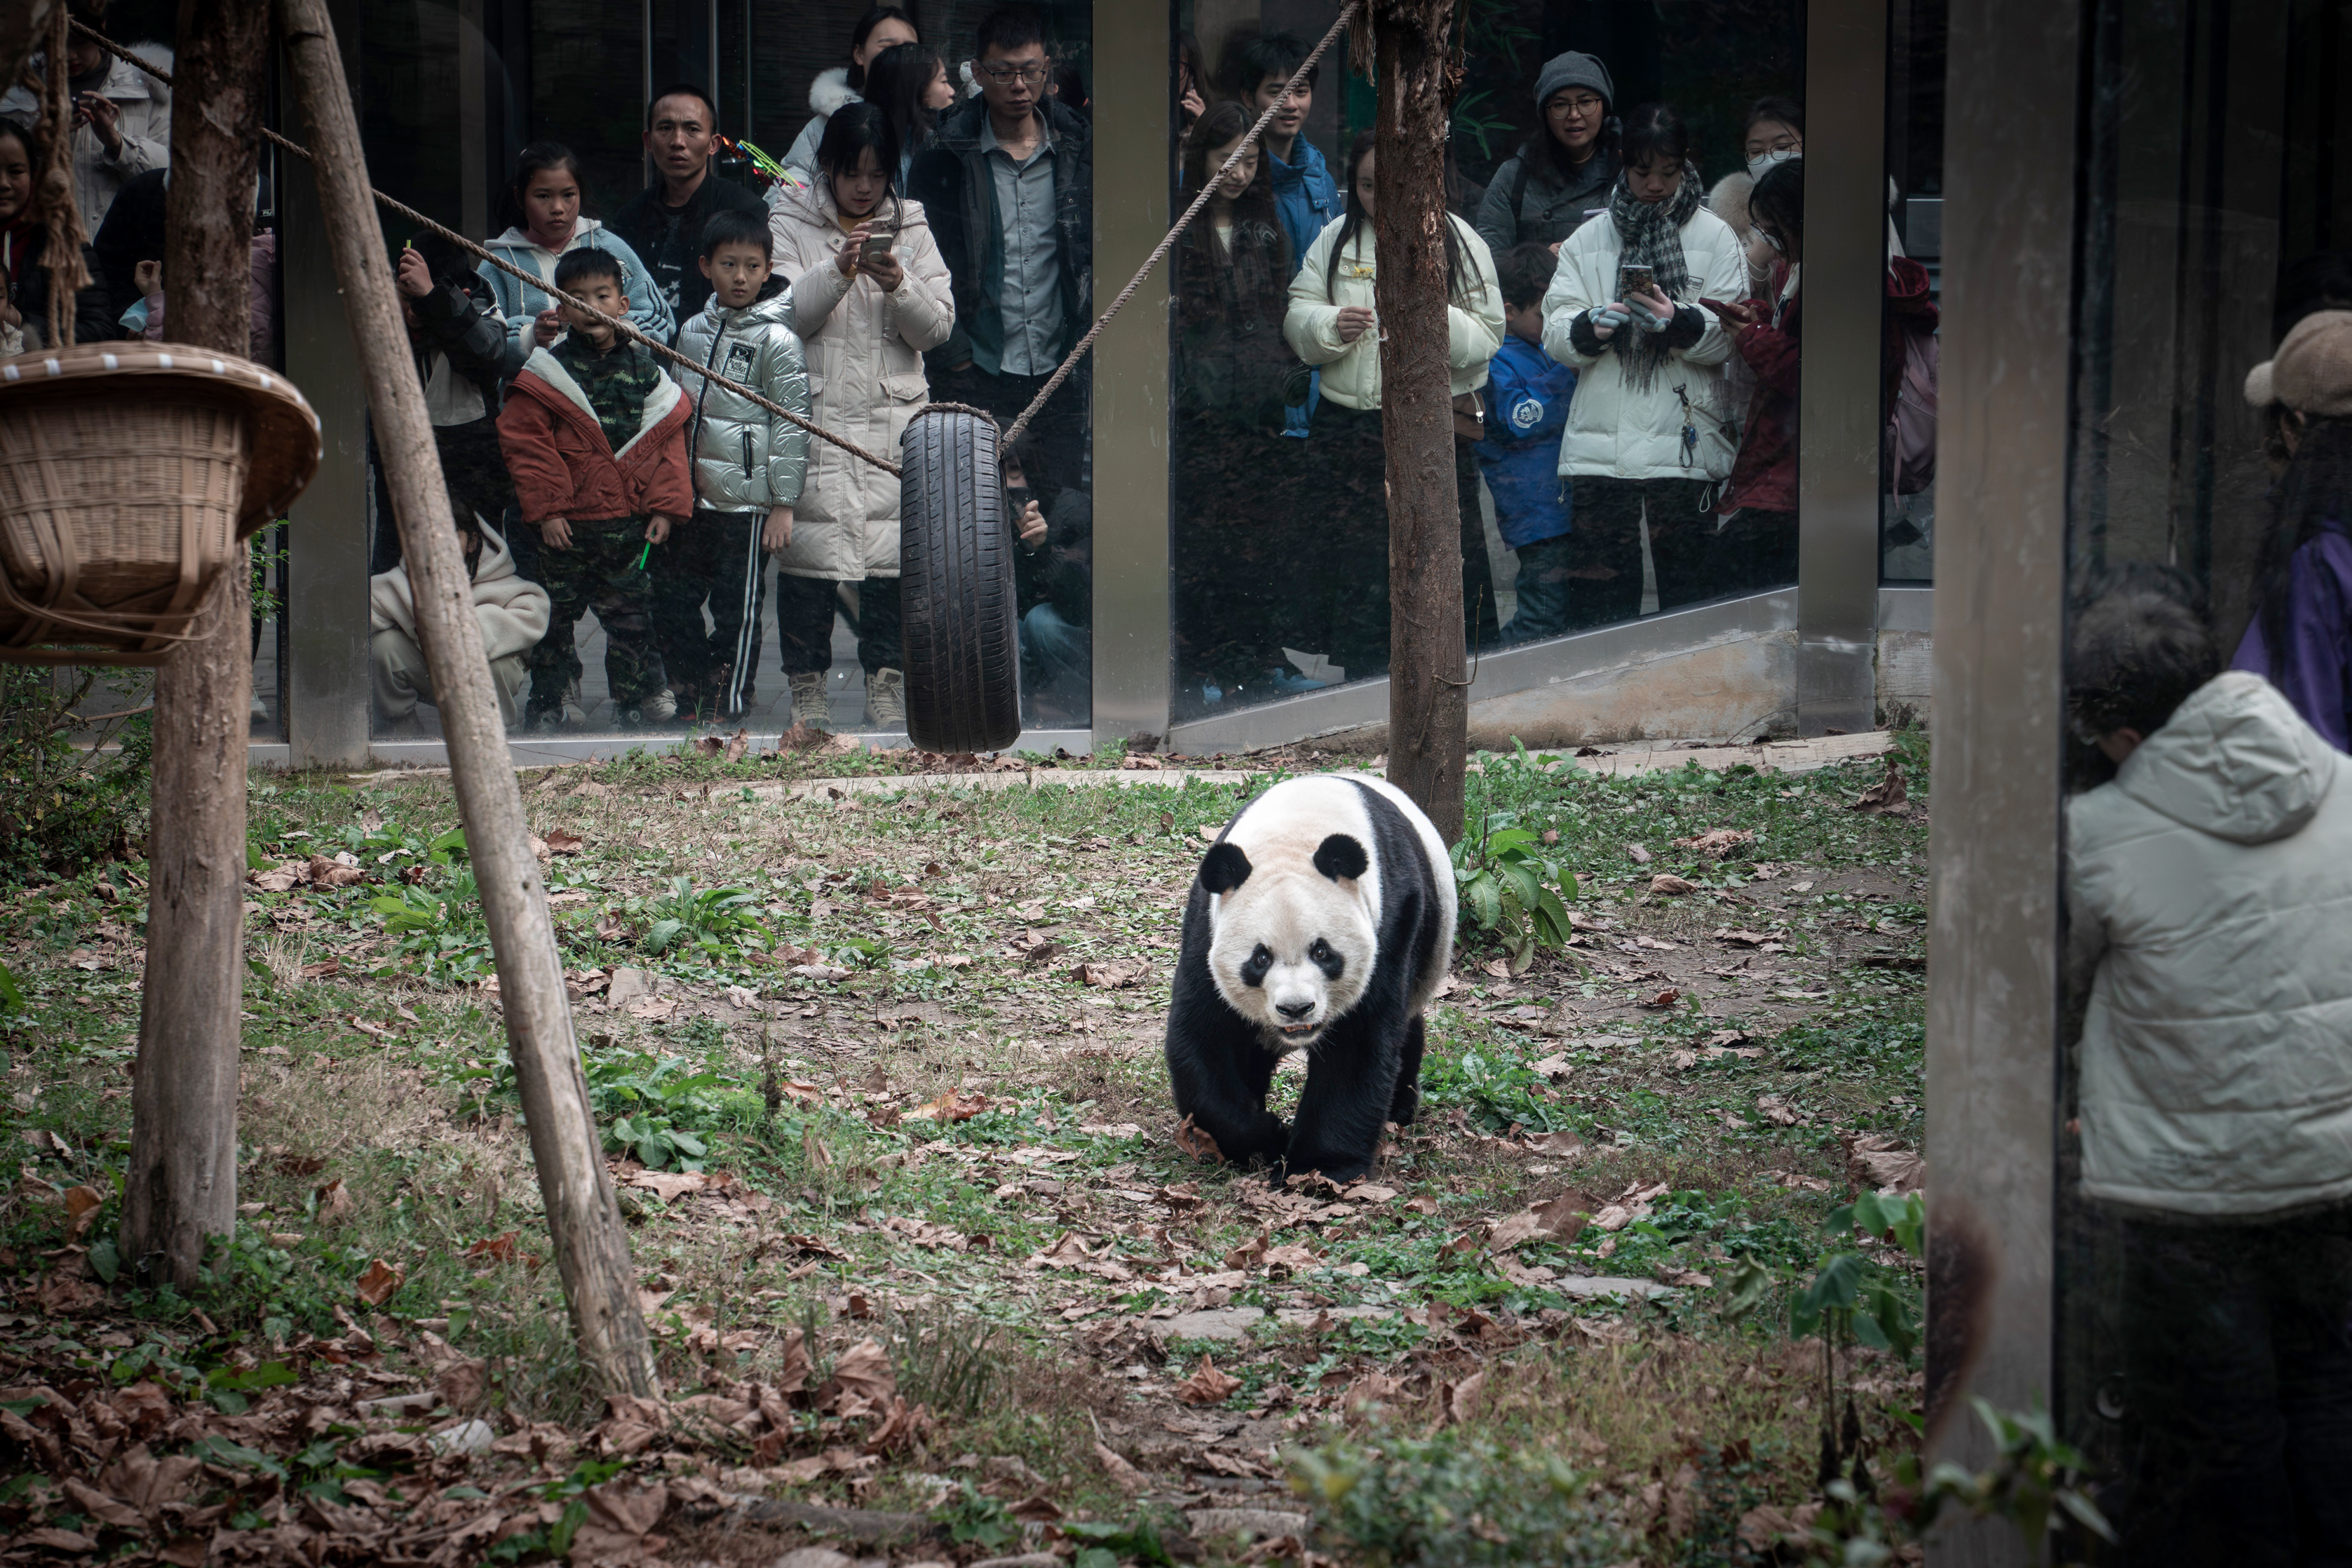 People 3354x2236 animals panda Zoo people grass China Asia